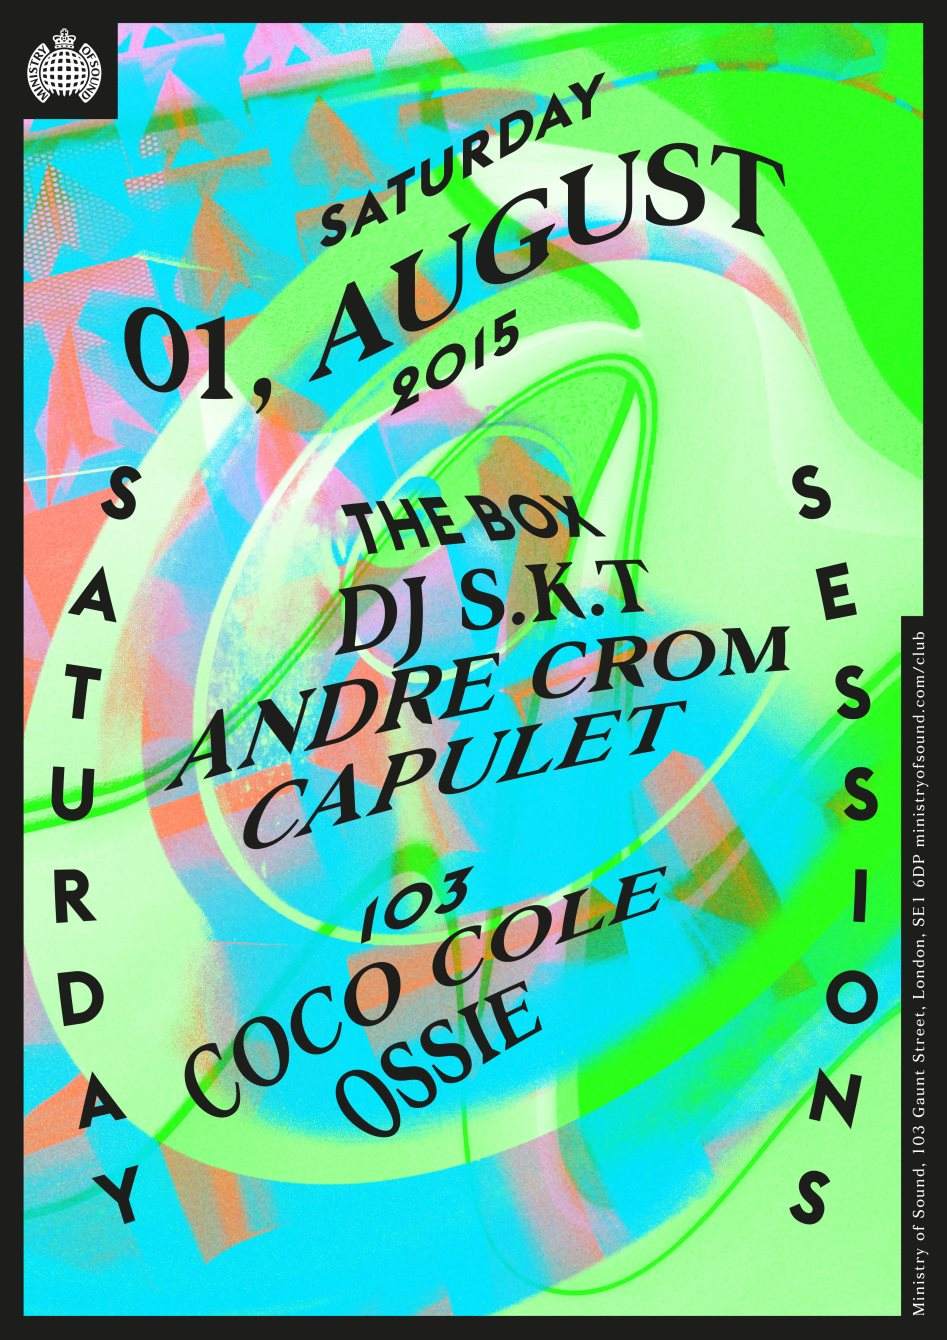 DJ S.K.T + Andre Crom + Capulet + Copy Paste Soul + Ossie - フライヤー表